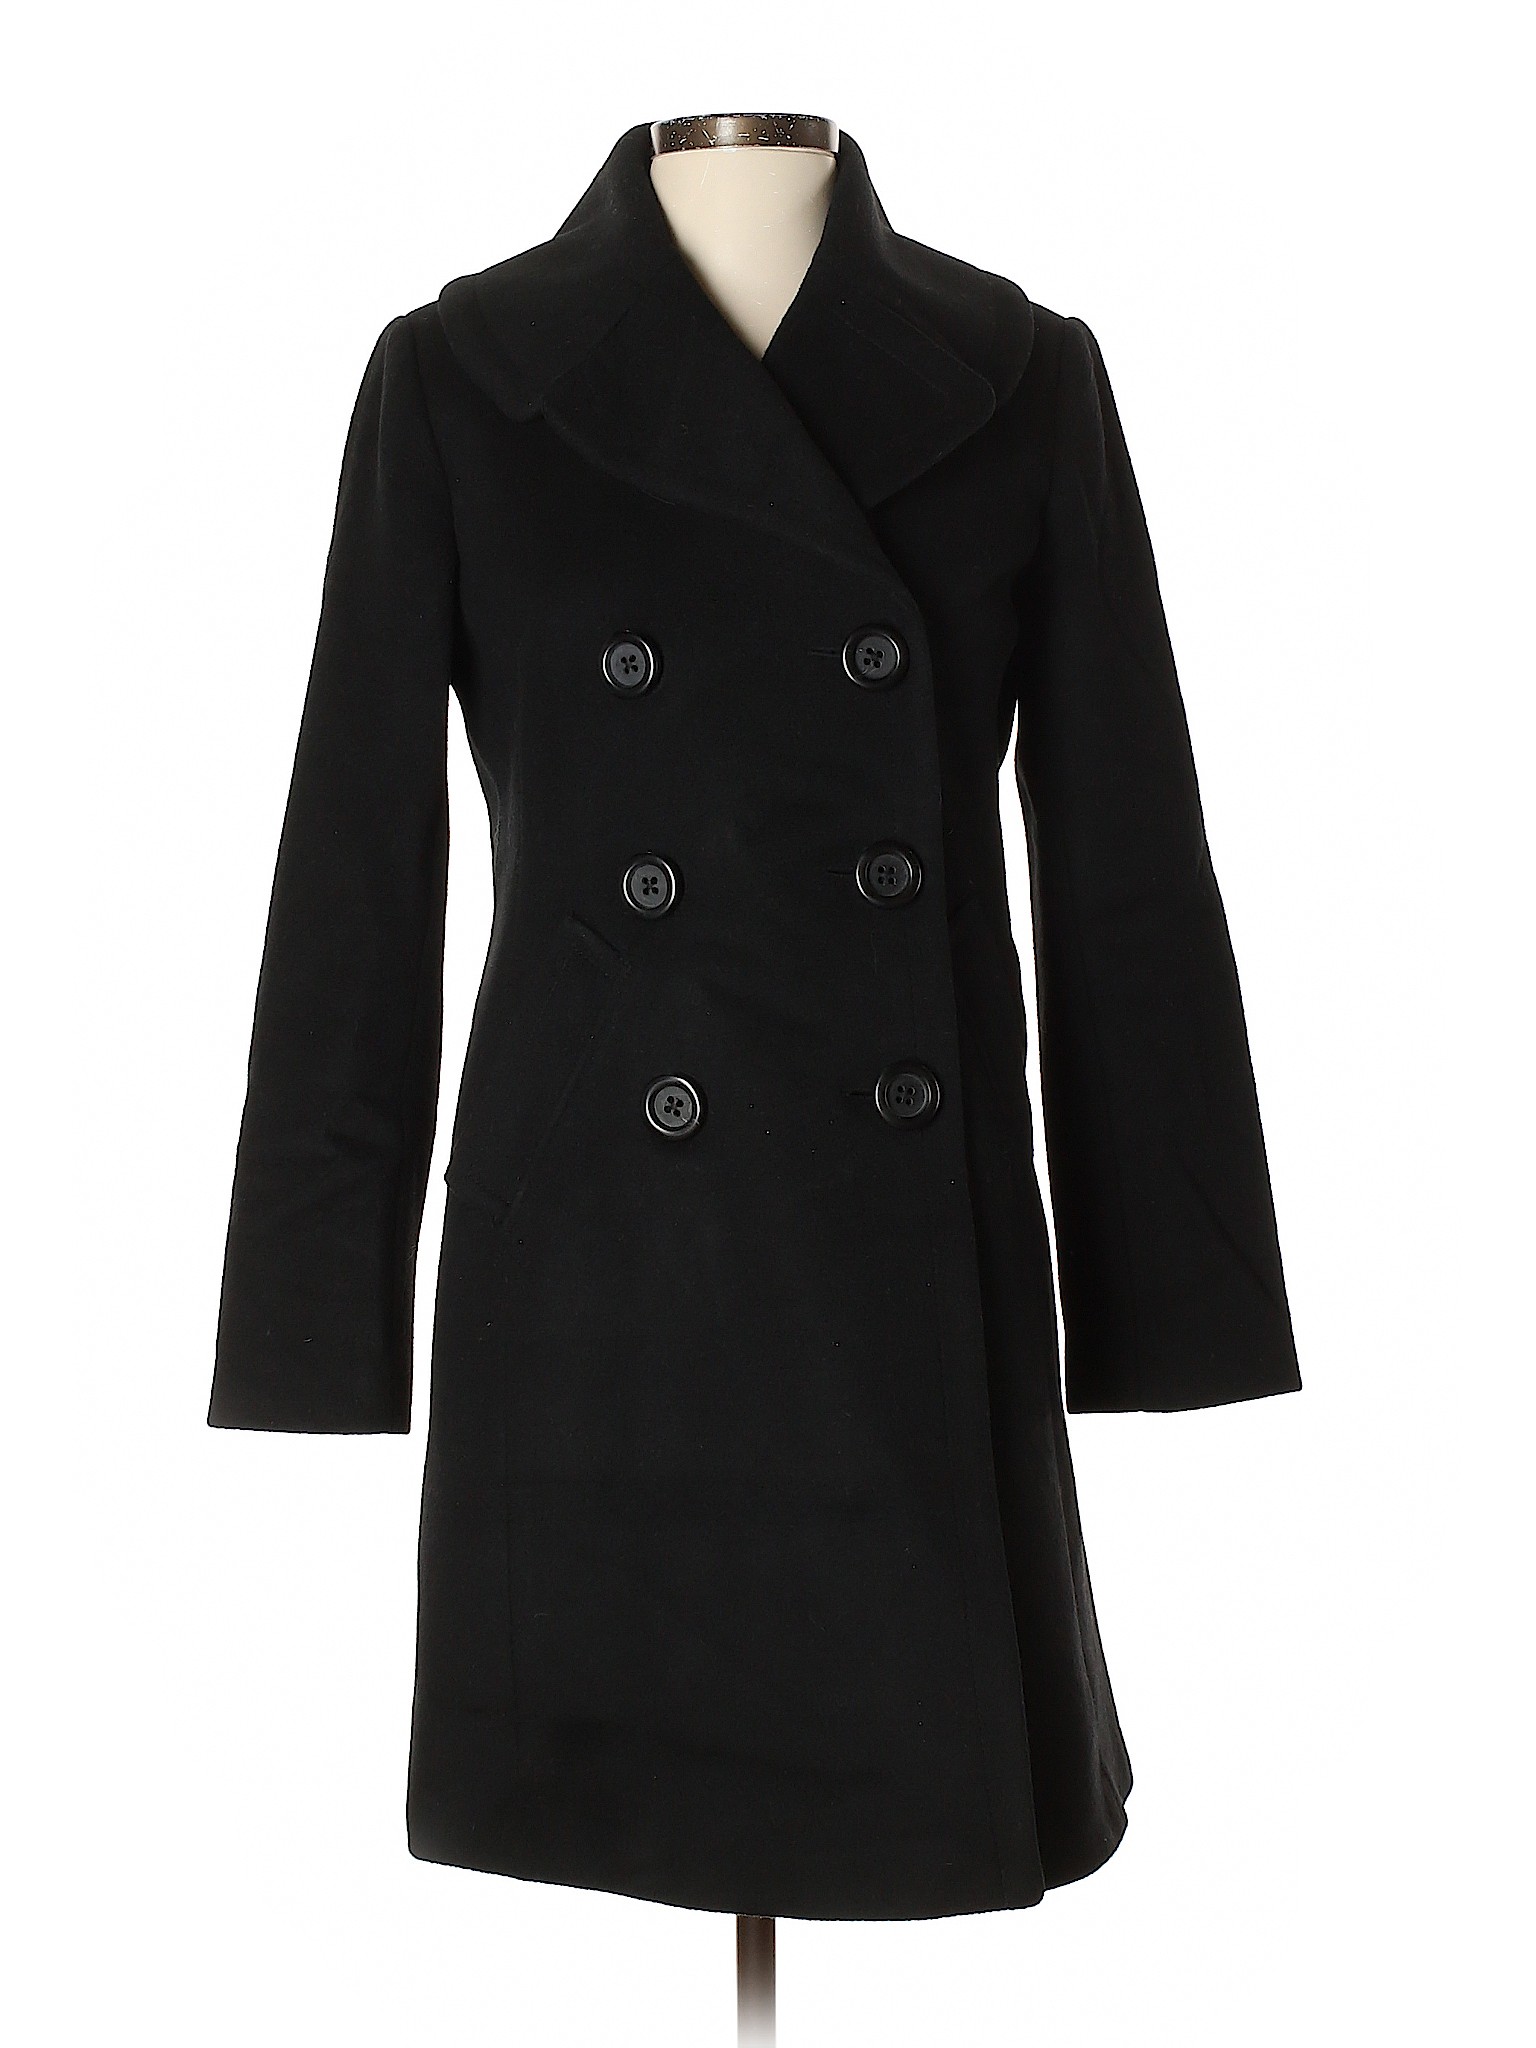 J. Crew Women Black Wool Coat 2 | eBay